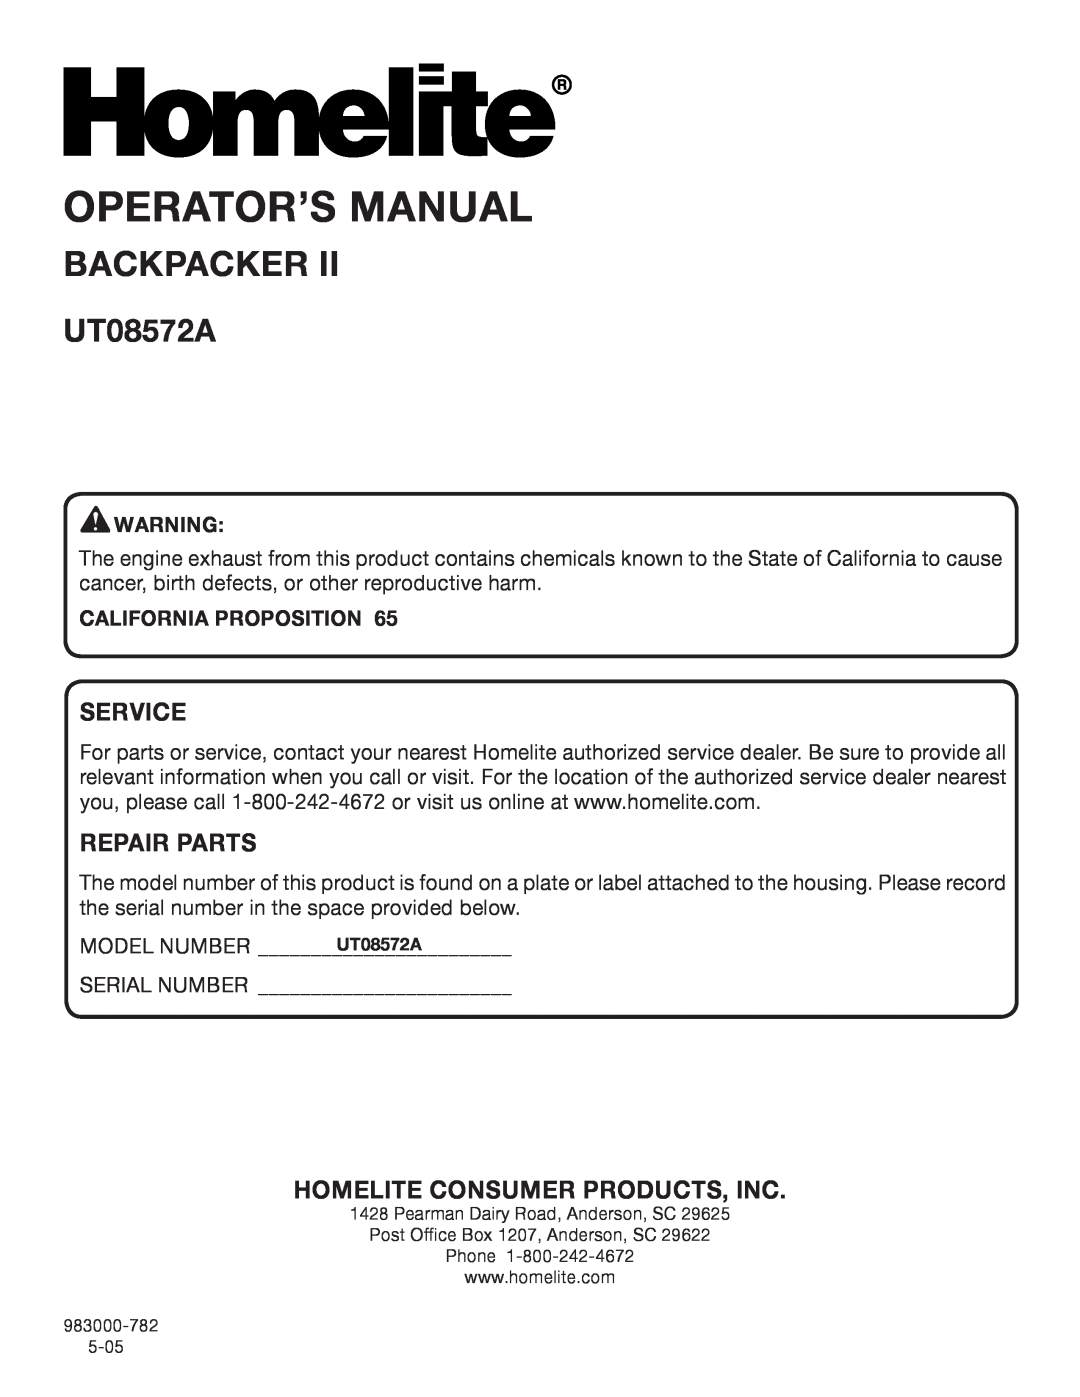 Homelite UT08572A manual Operator’S Manual, Backpacker, Service, Repair Parts, Homelite Consumer Products, Inc 